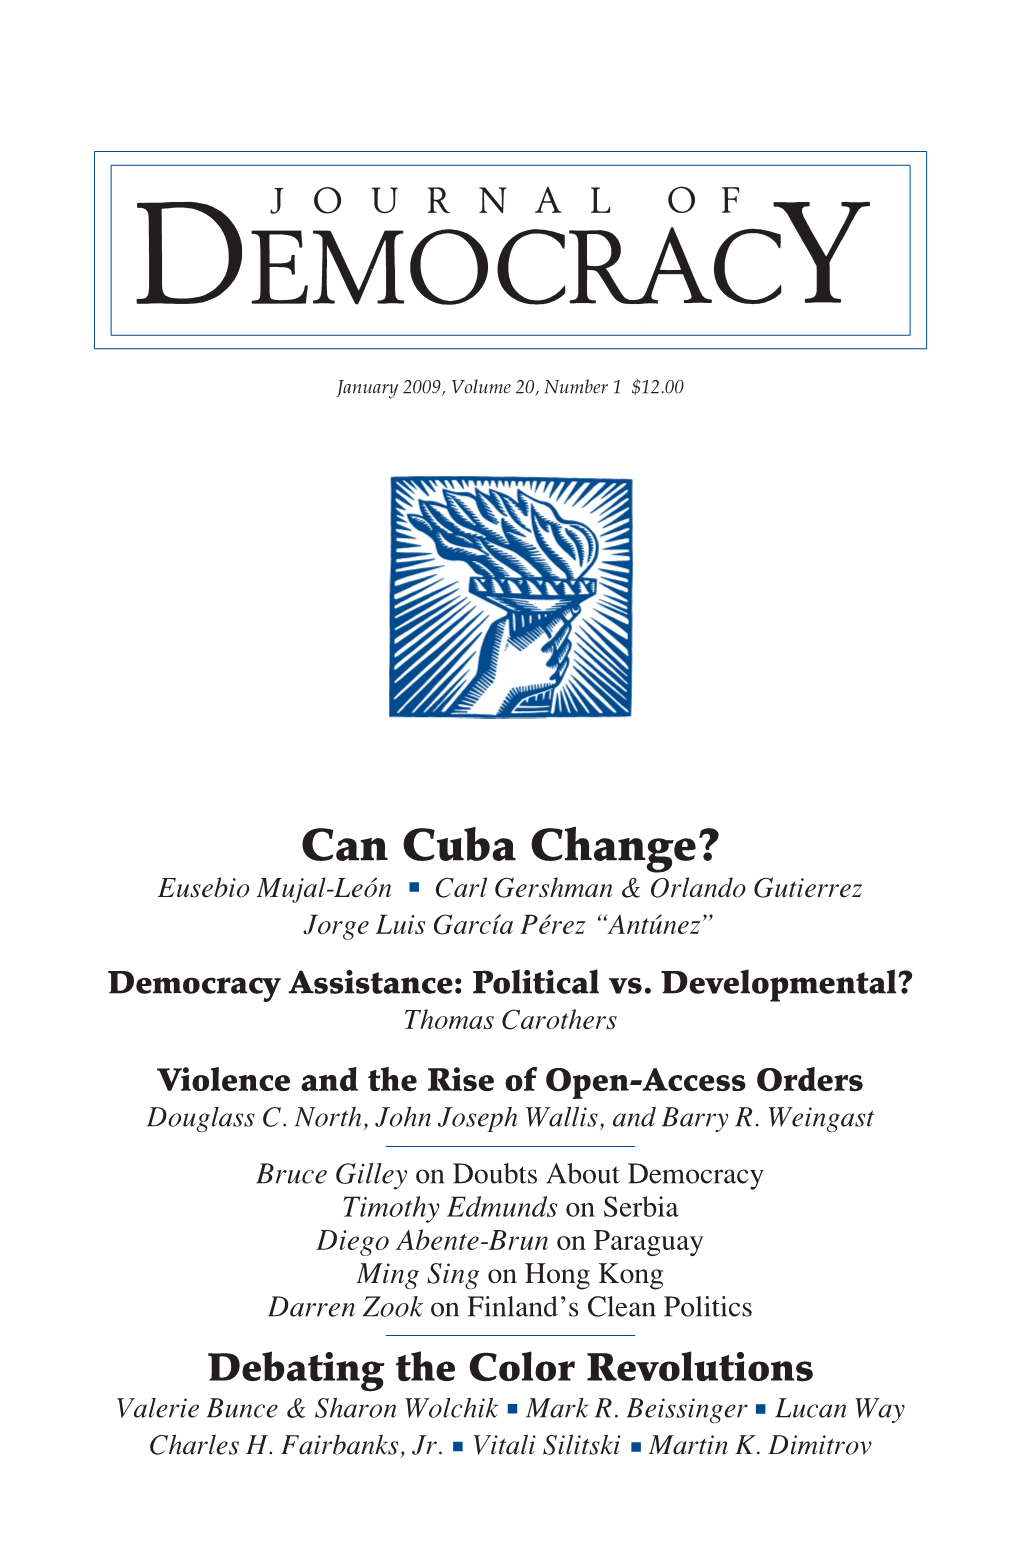 Can Cuba Change? Eusebio Mujal-León Carl Gershman & Orlando Gutierrez Jorge Luis García Pérez “Antúnez” Democracy Assistance: Political Vs